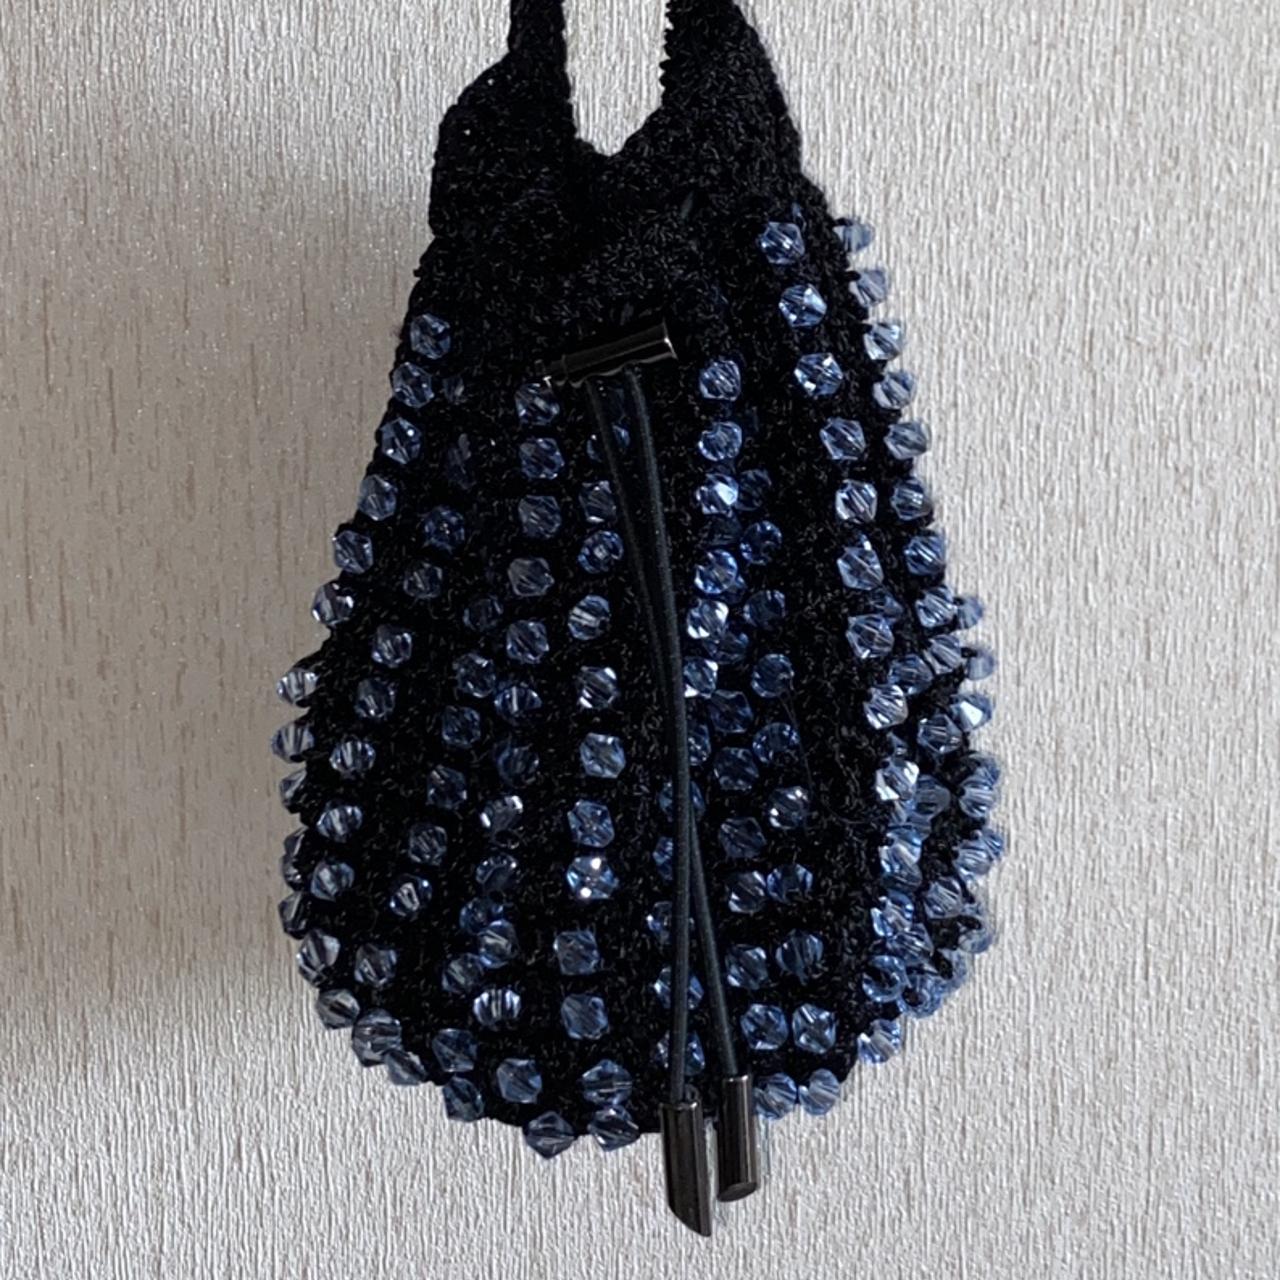 Kiko kostadinov Crochet bag (Webstore